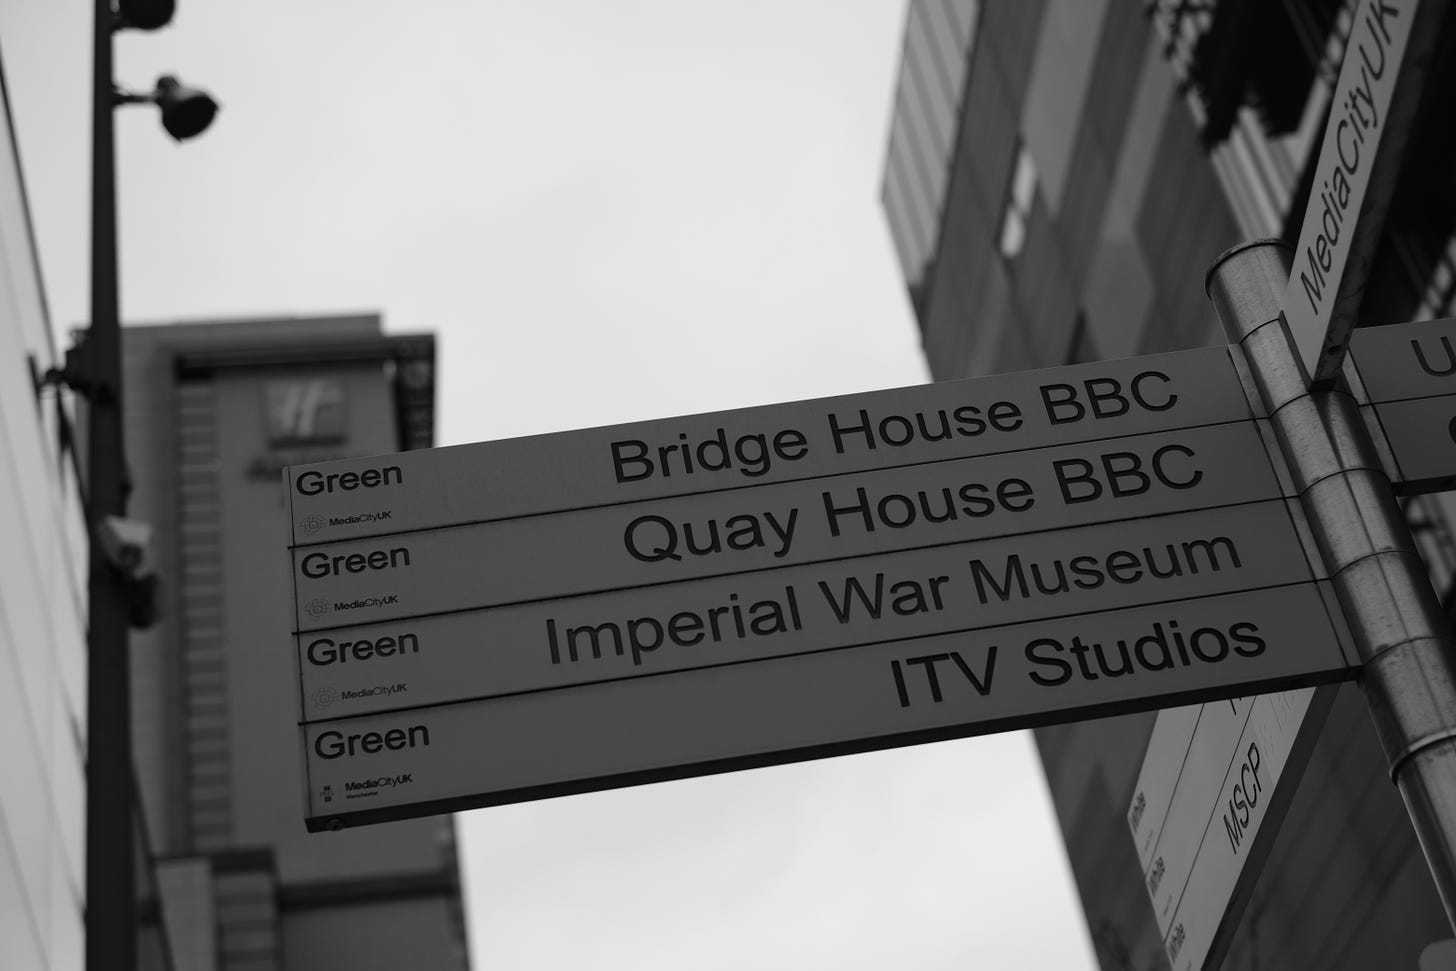 BBC street sign